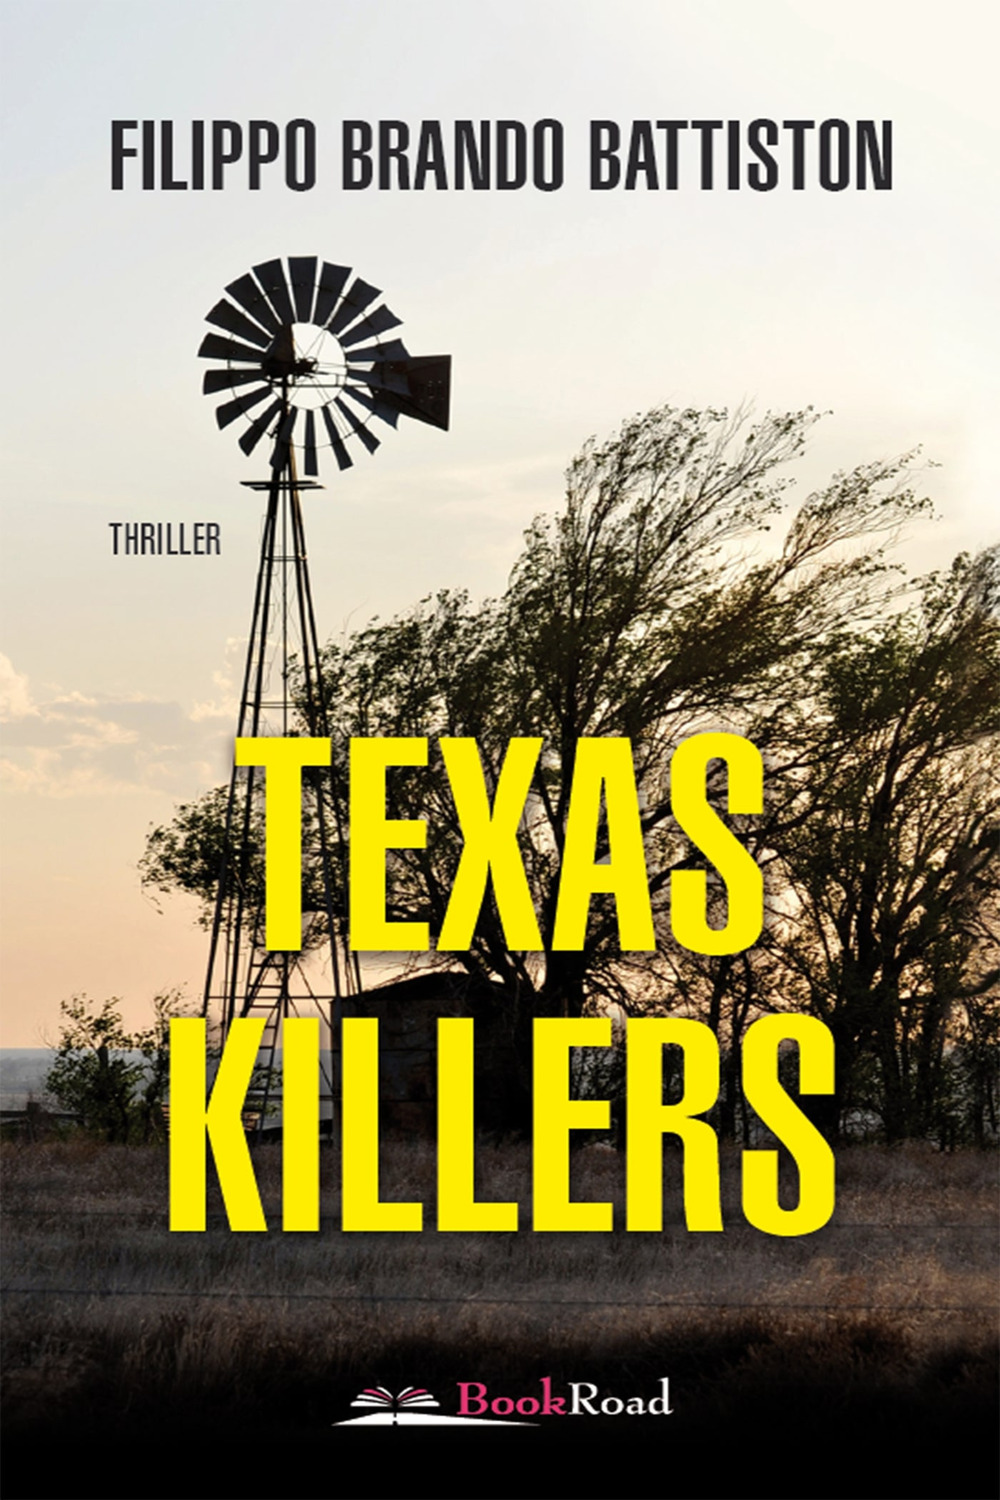 Texas killers